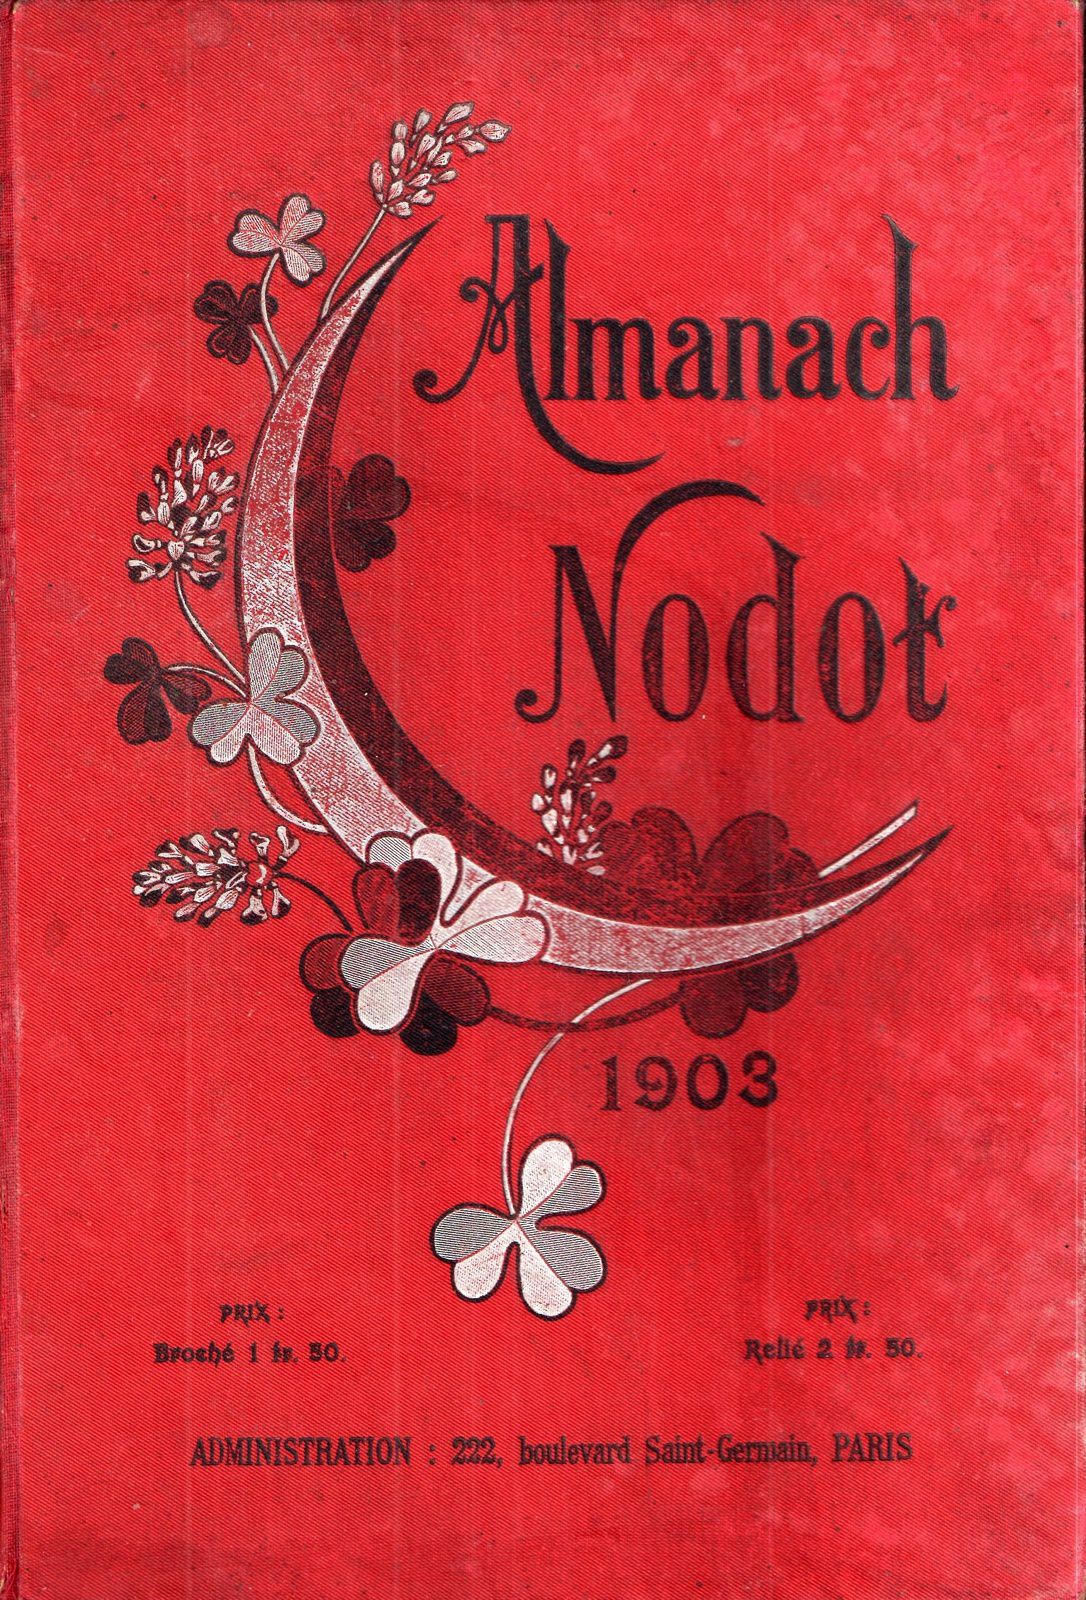 Gus Bofa dans l'Almanach Nodot (1903)